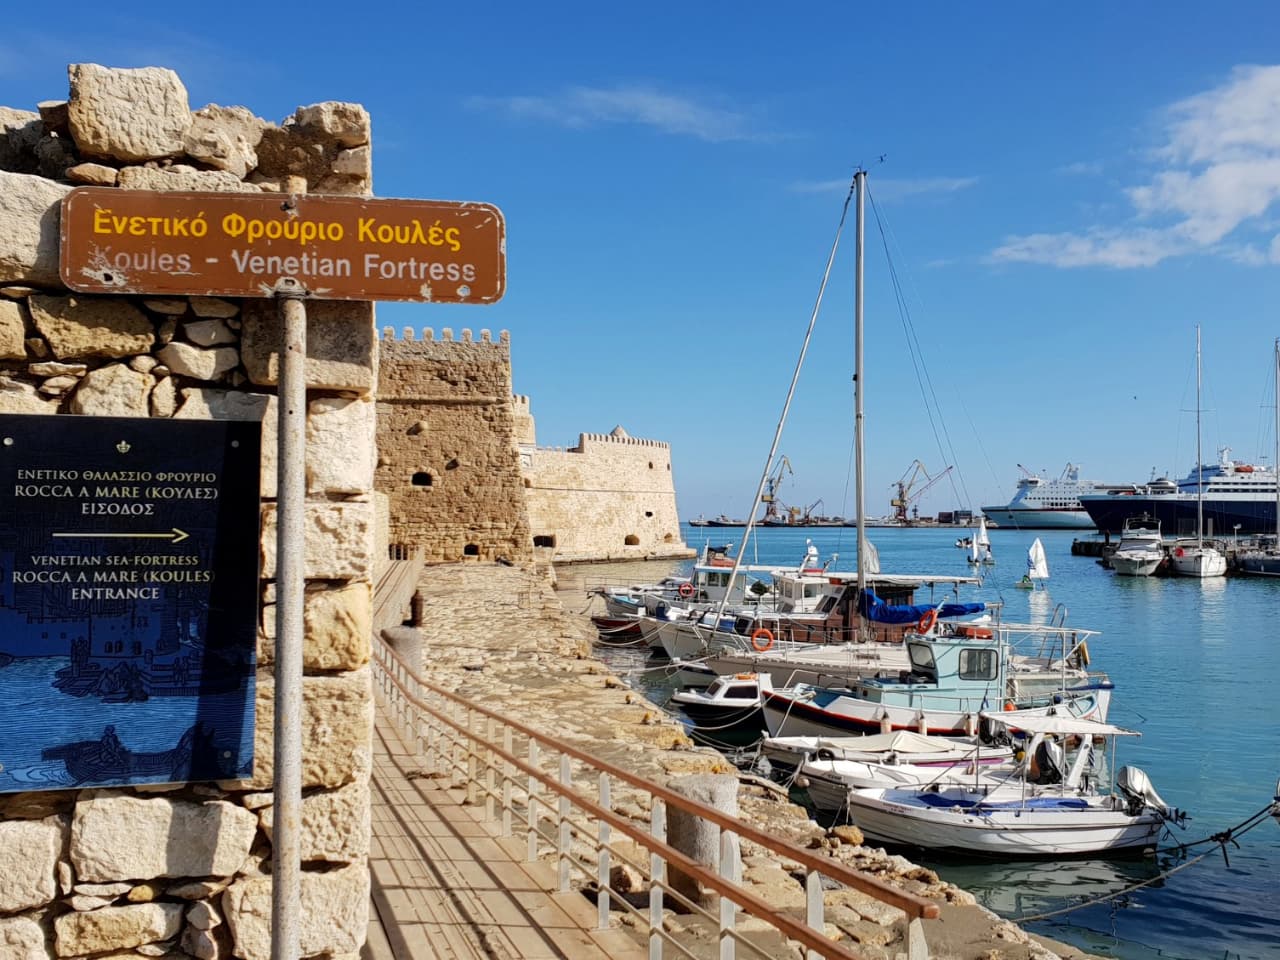 A Tour of the City of Heraklion Crete